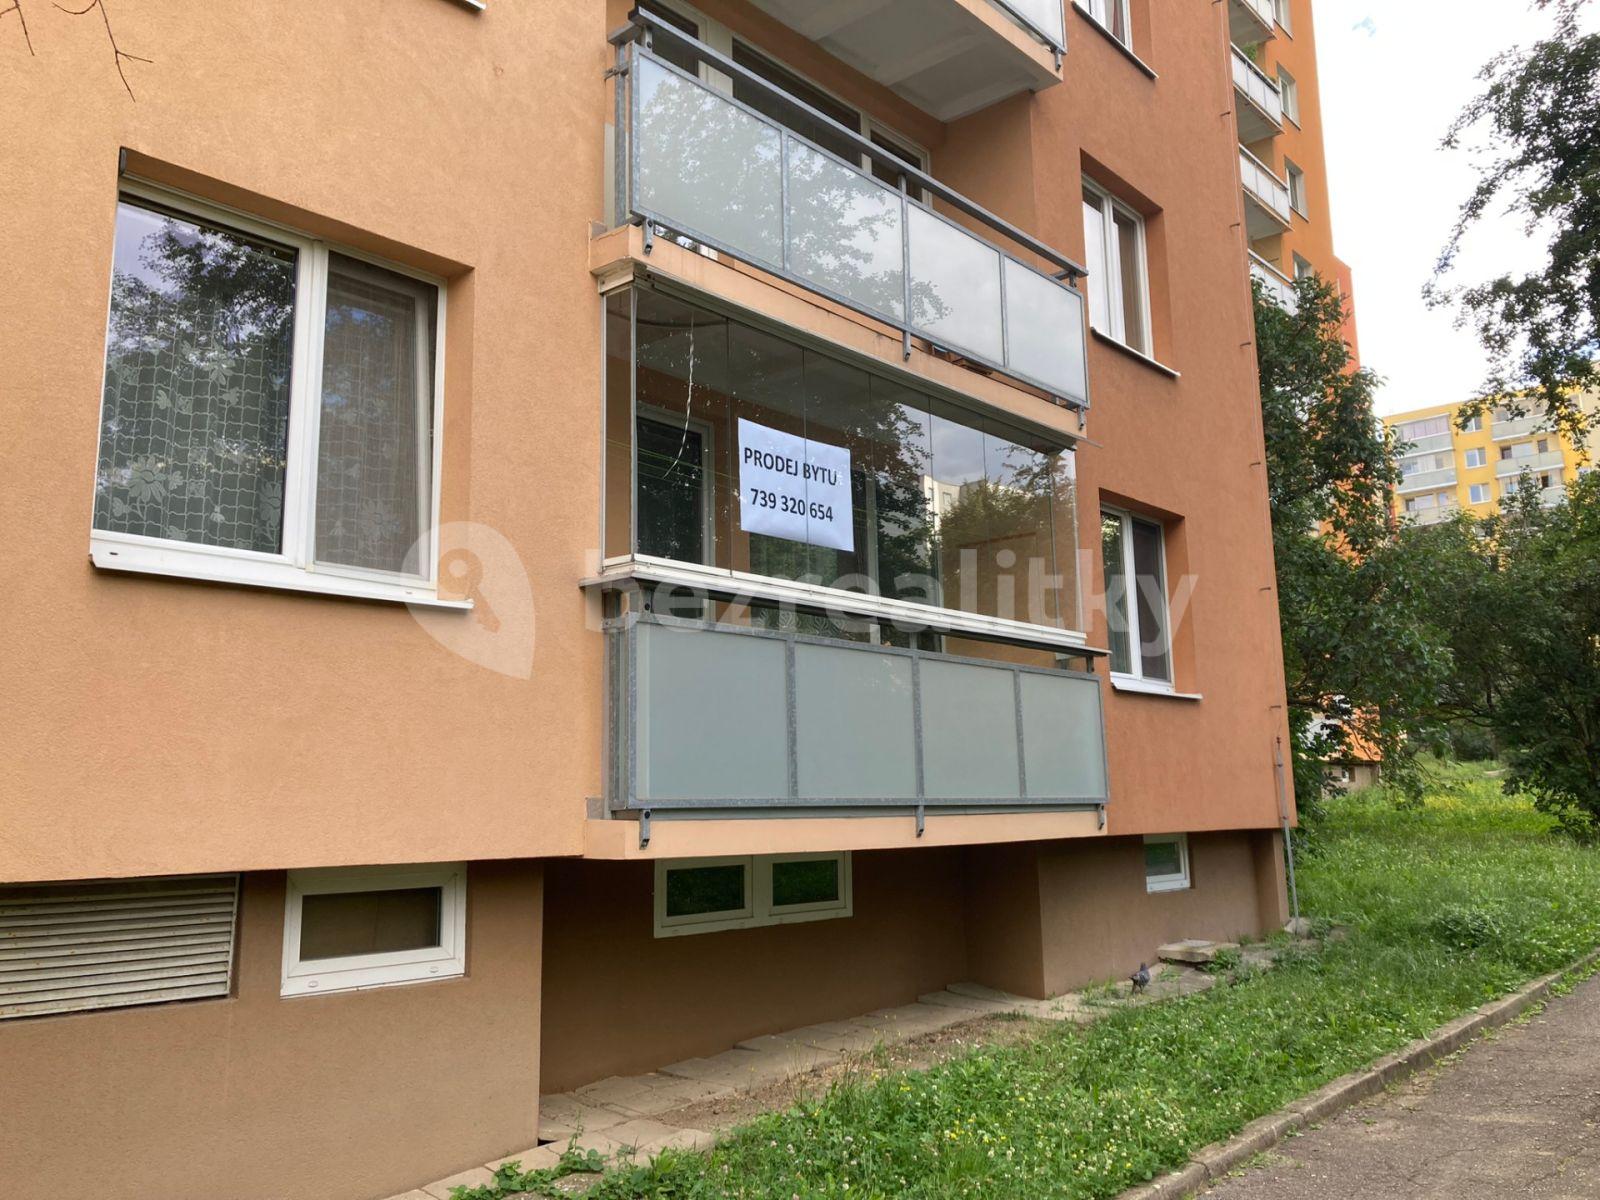 3 bedroom flat for sale, 77 m², Oderská, Brno, Jihomoravský Region